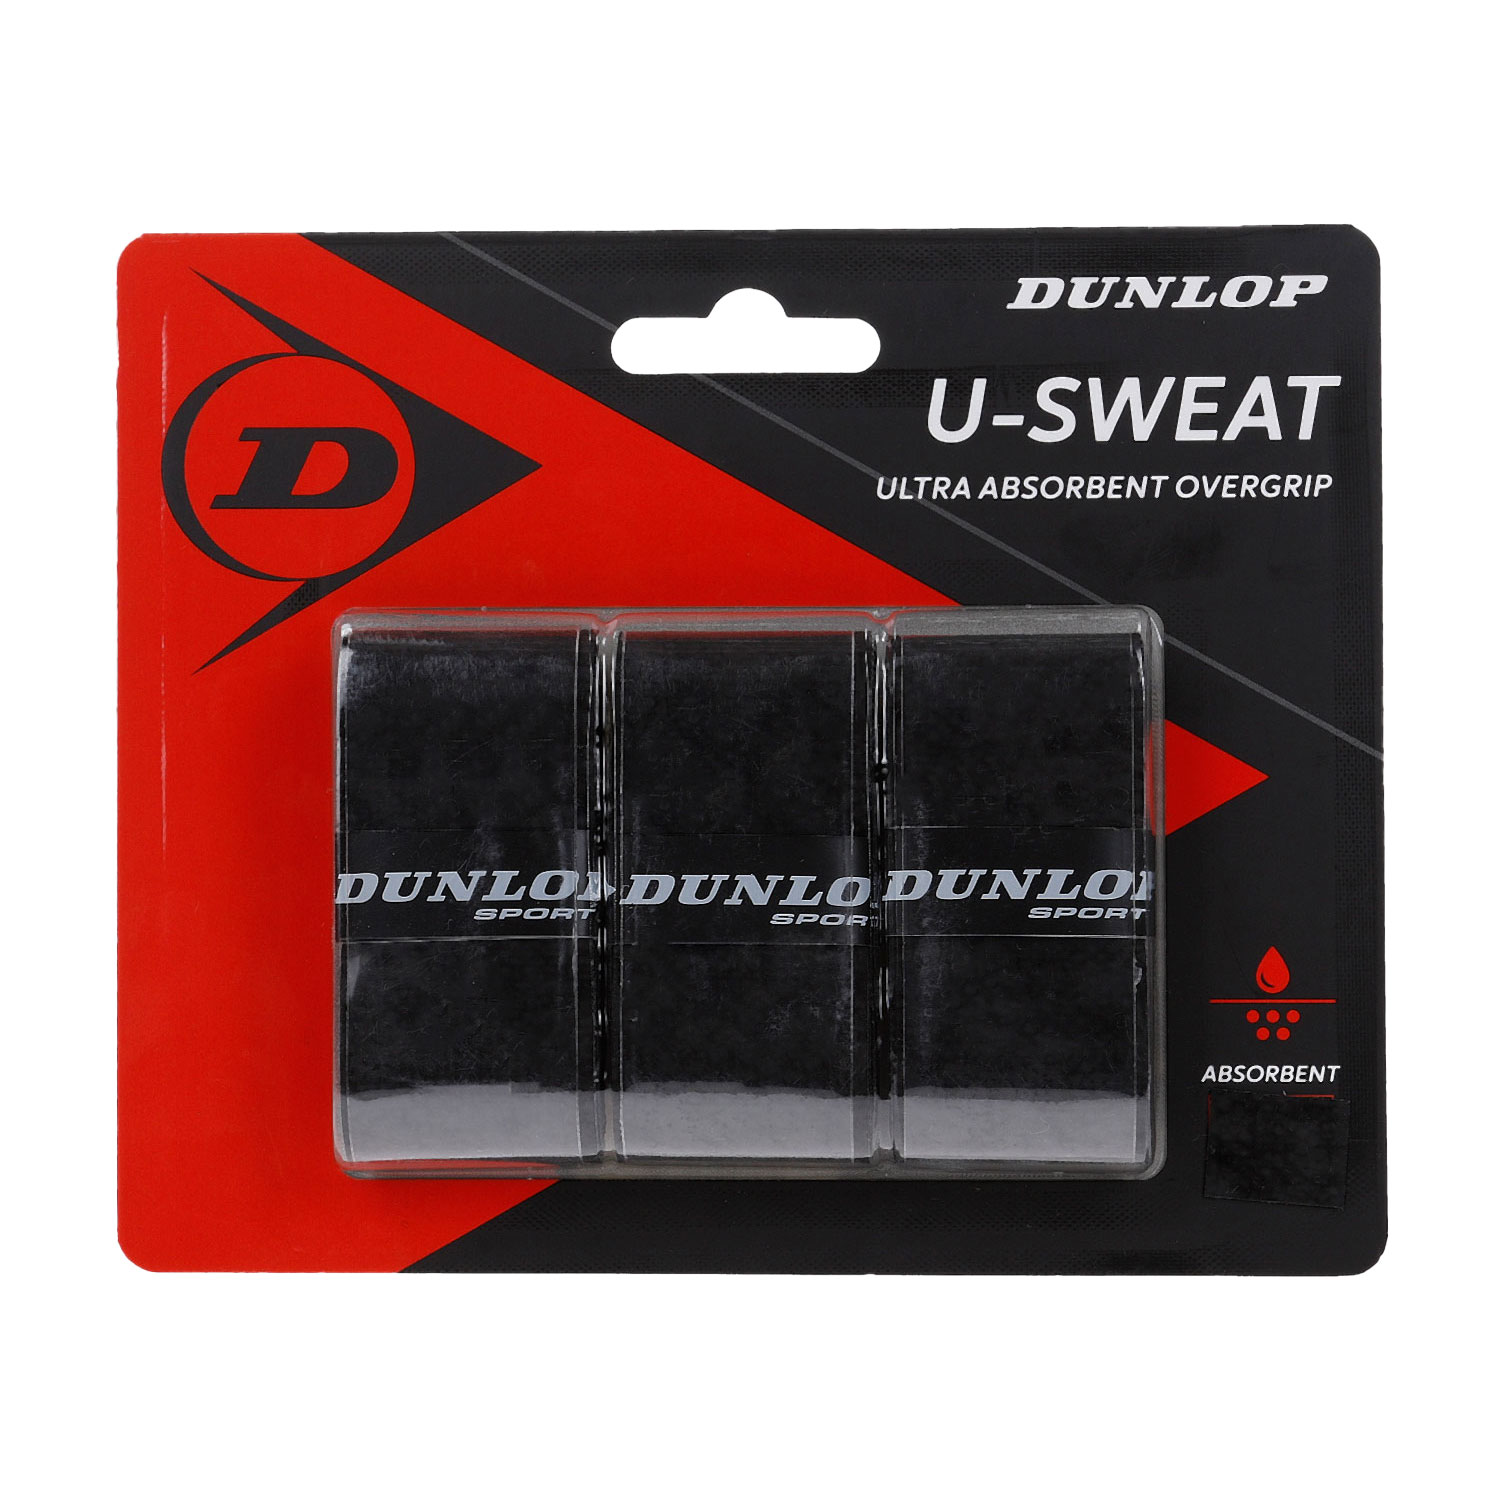 Dunlop U-Sweat Overgrip x 3 - Black